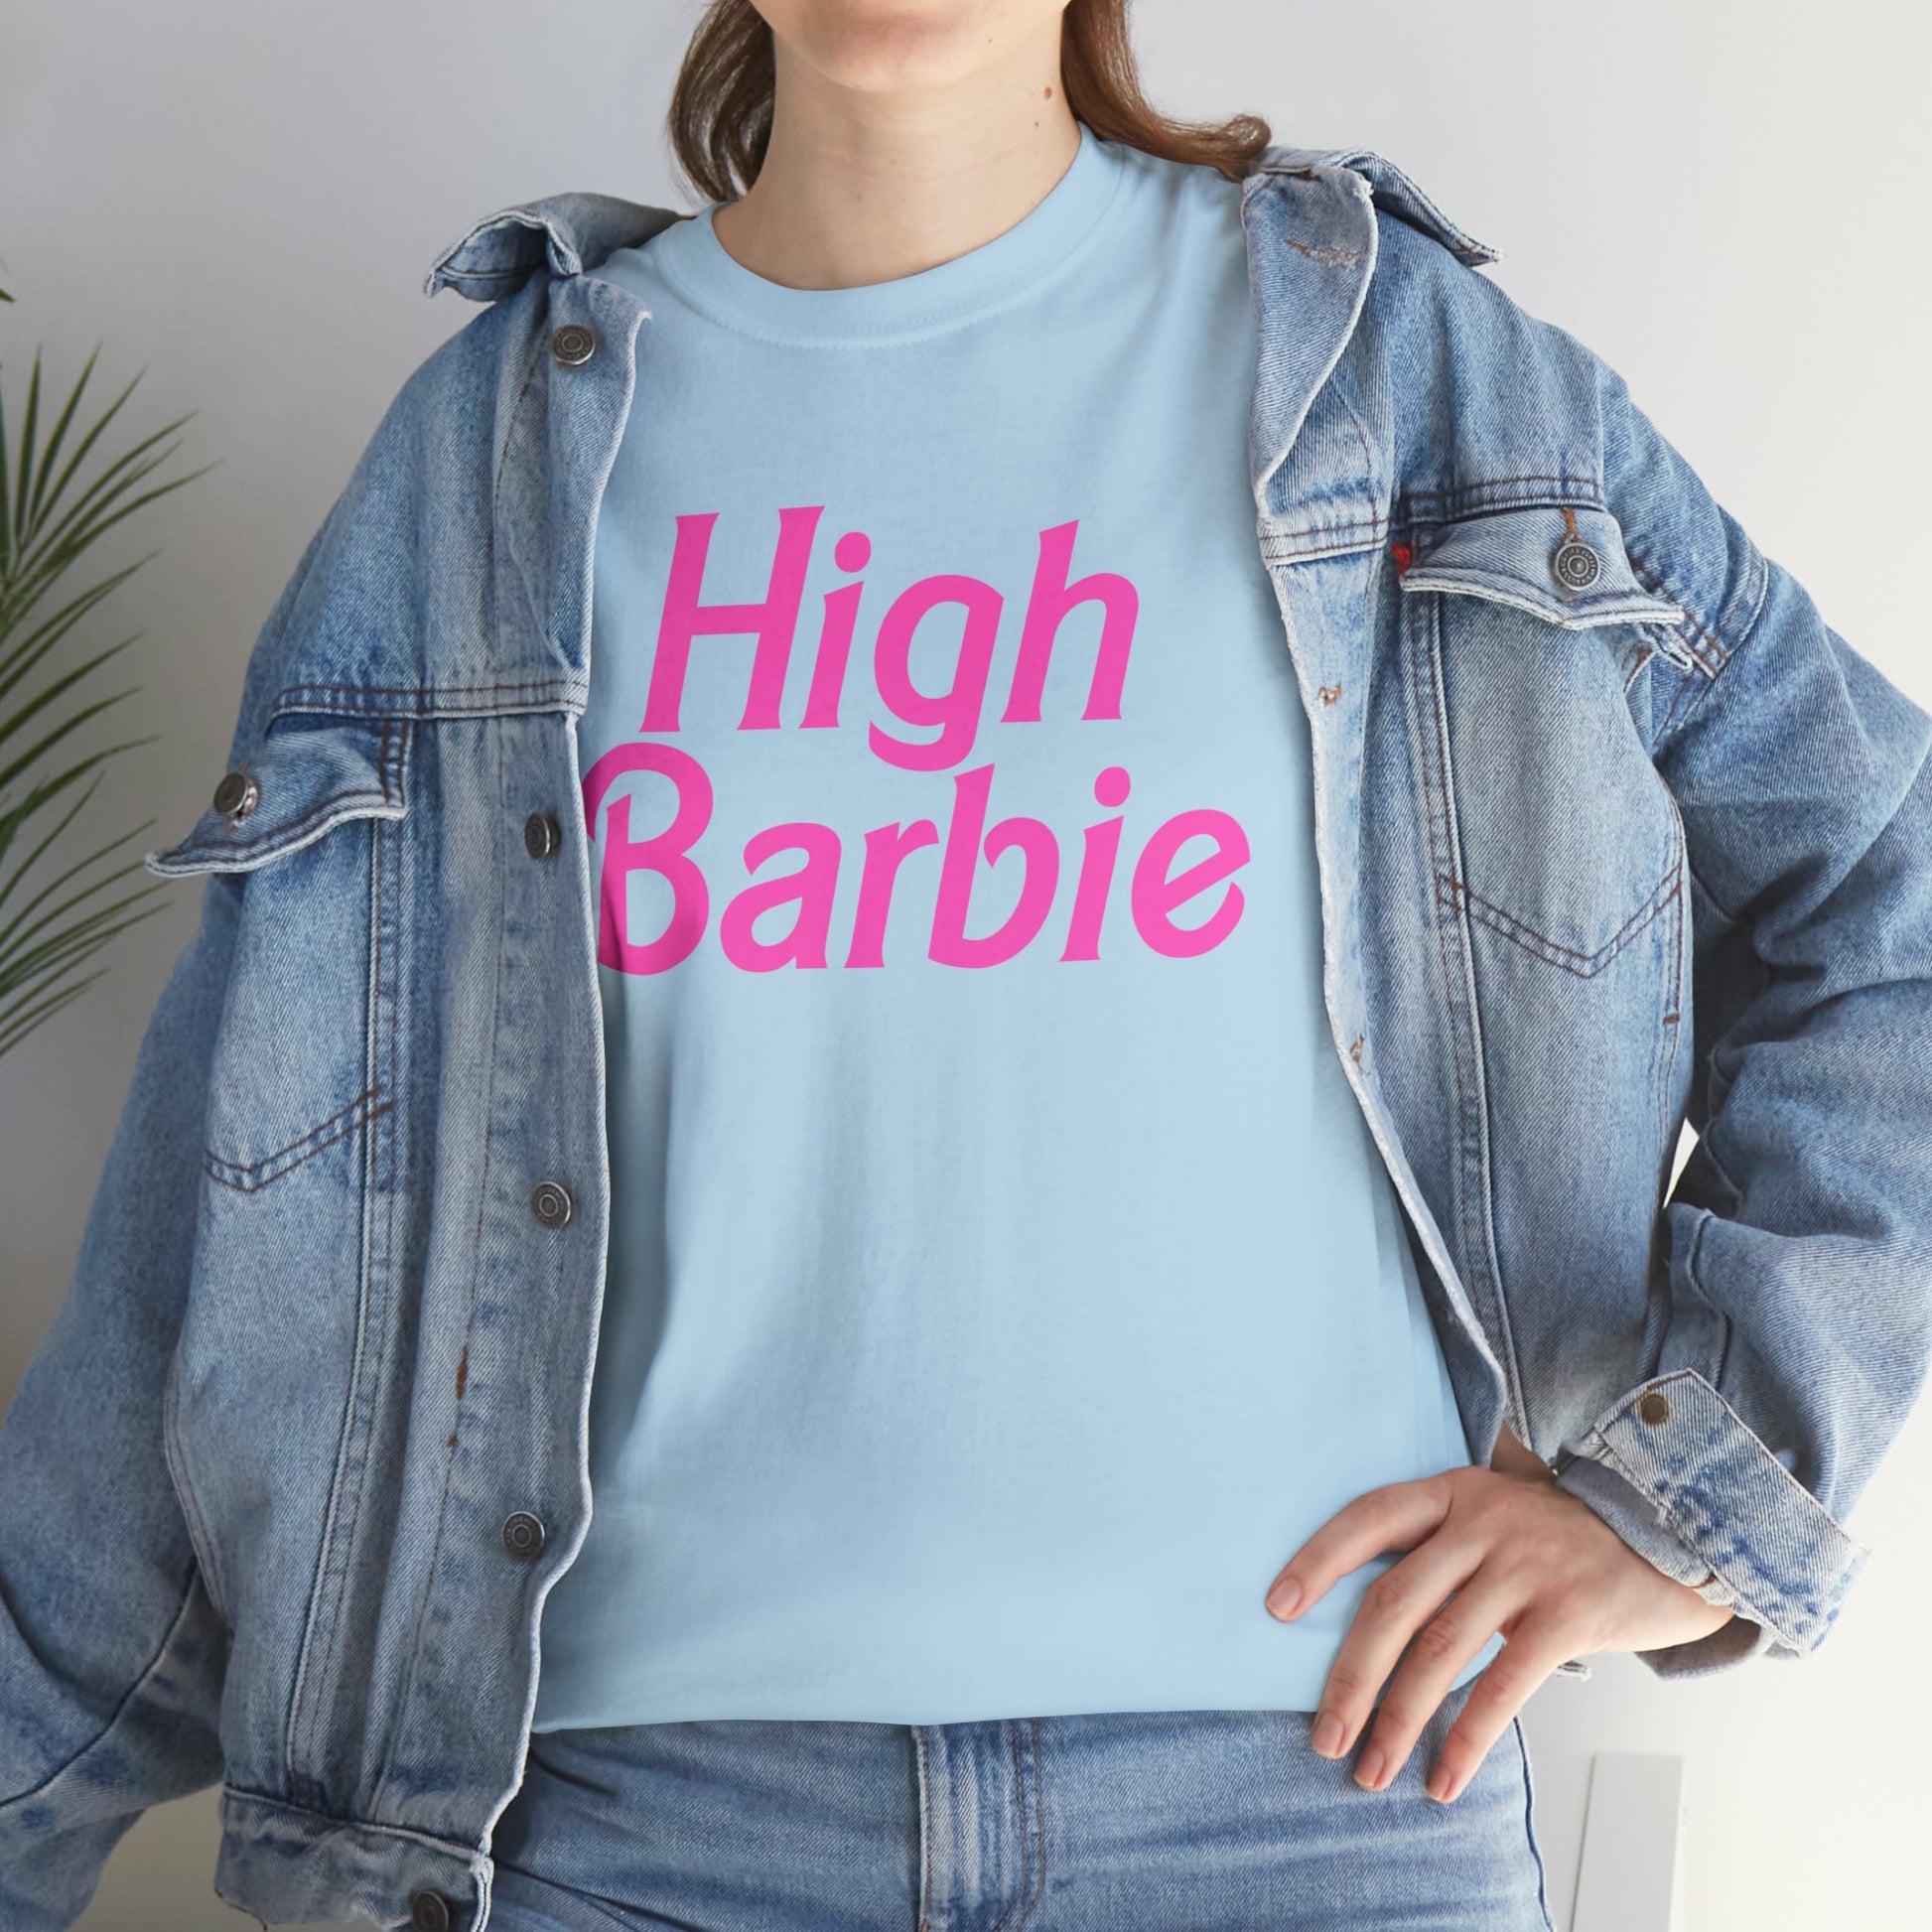 HIGH BARBIE - Funny Vintage Style Stoner Gift Unisex T-Shirt - Asylum Books